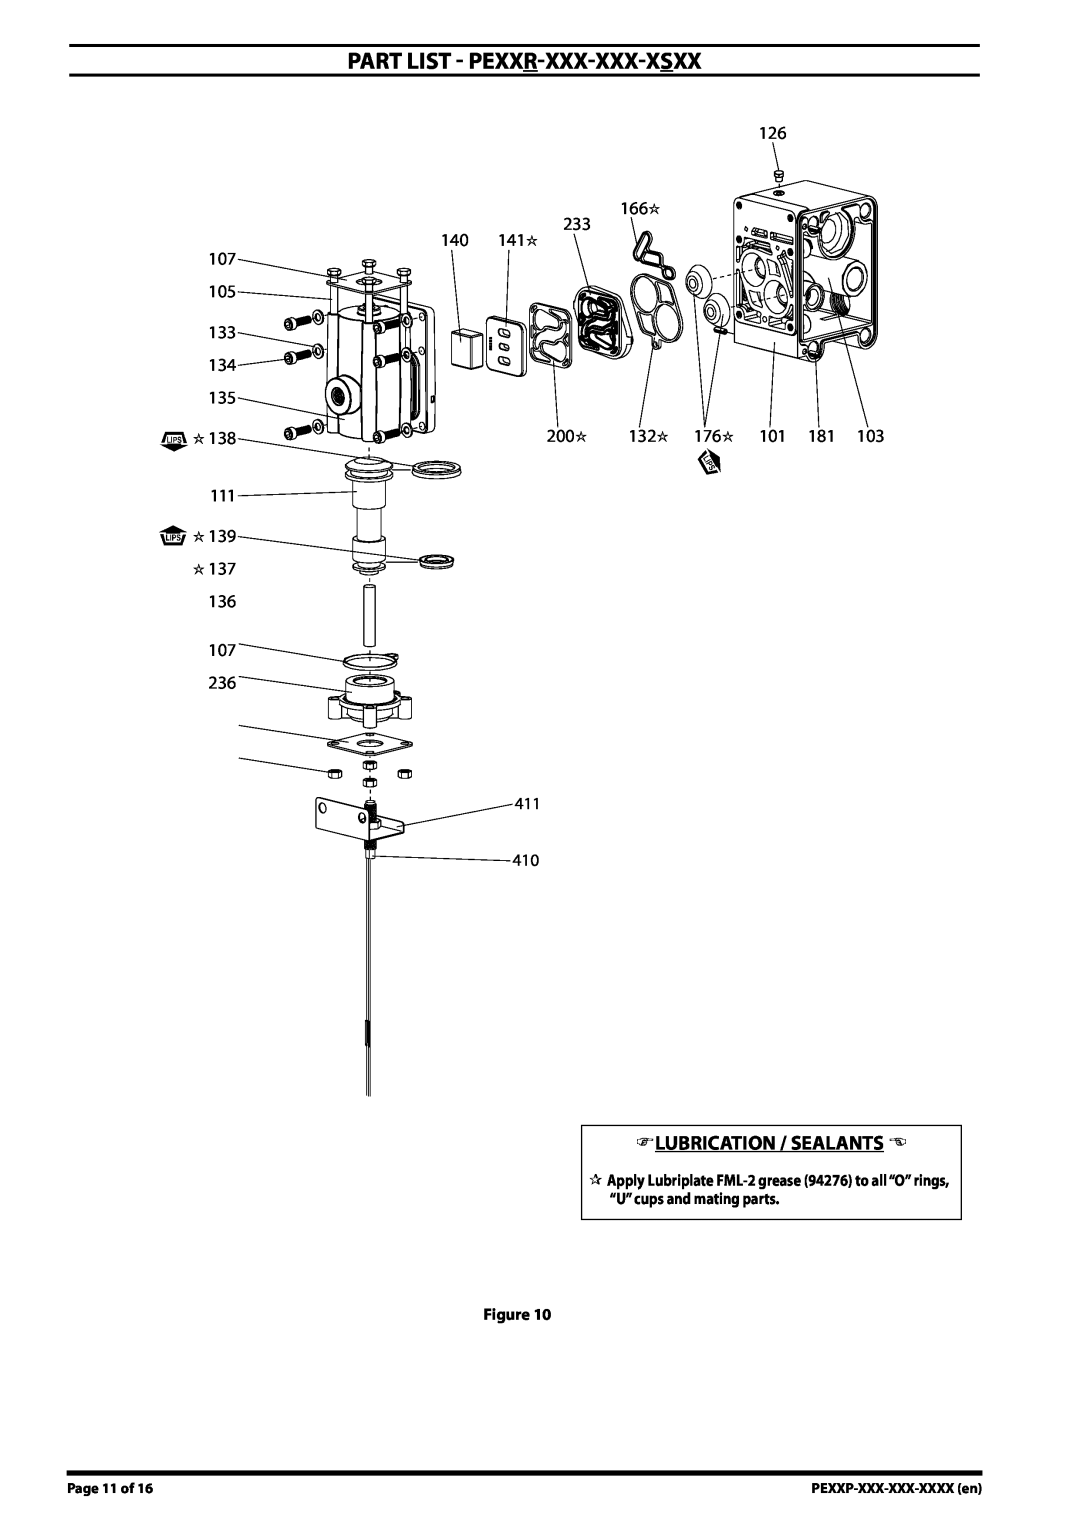 Ingersoll-Rand PE15X-XXX-XXX-XXXX manual PArt list - PEXXR-XXX-XXX-XSXX, Lubrication / Sealants , Page 11 of 